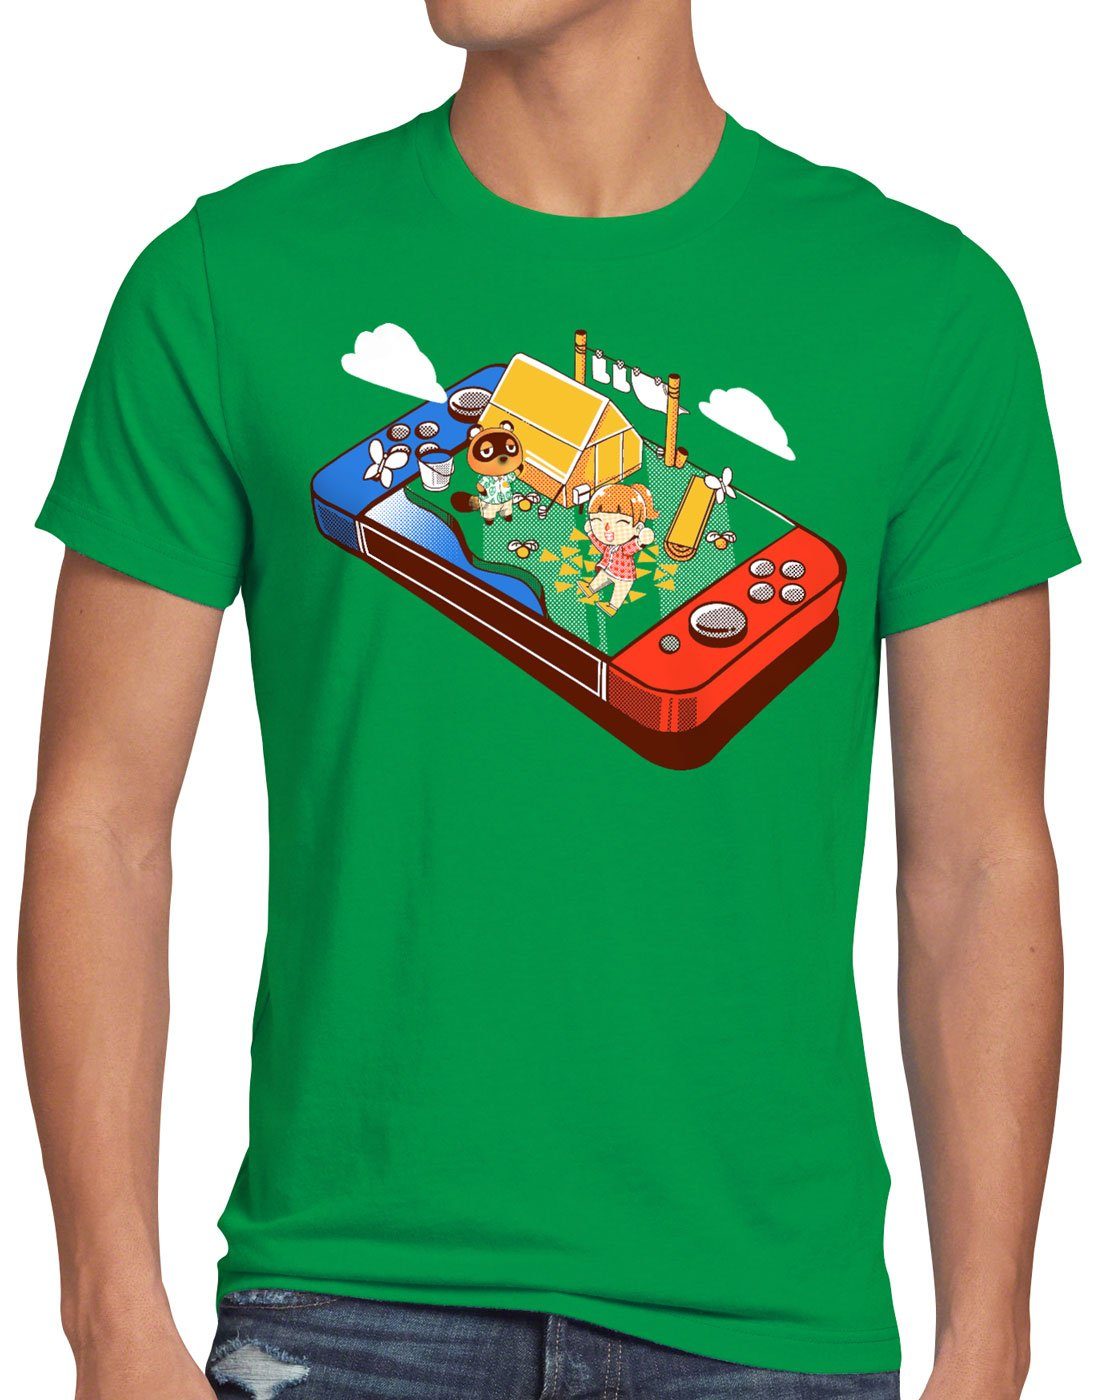 Print-Shirt grün T-Shirt animal videospiel Pocket Herren style3 switch horizons Crossing